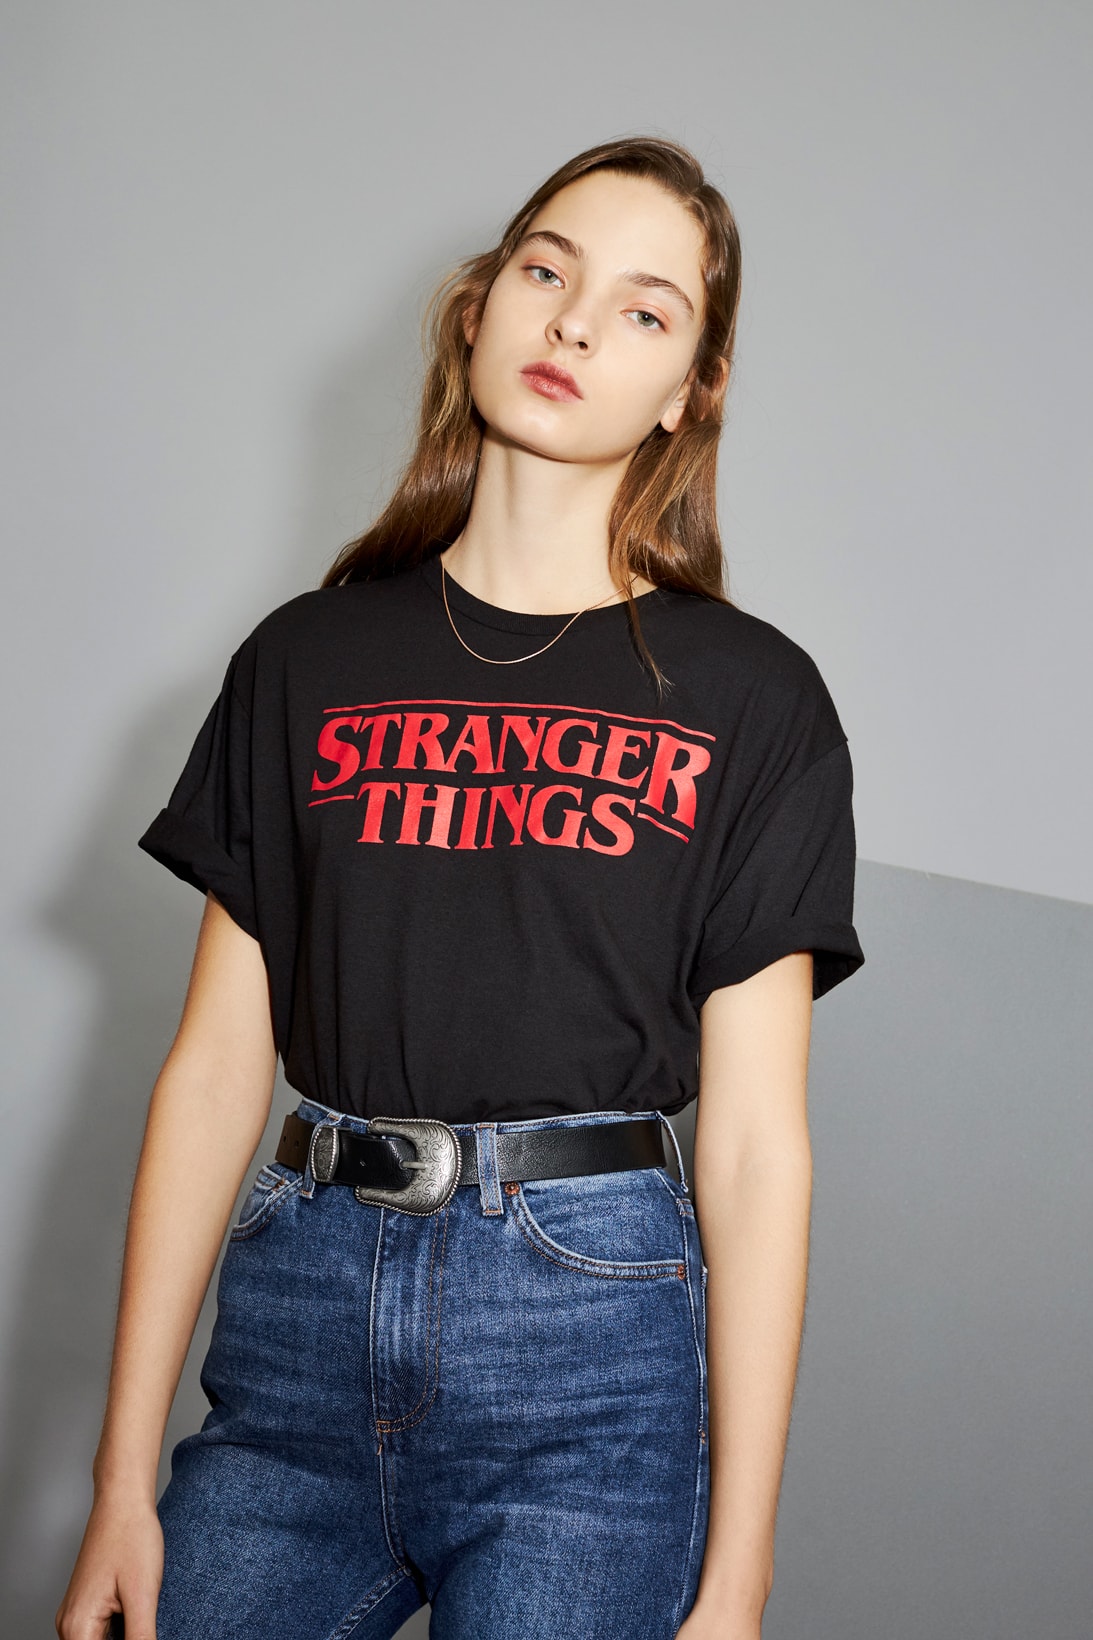 TOPSHOP TOPMAN Stranger Things Collection Netflix London Oxford Street